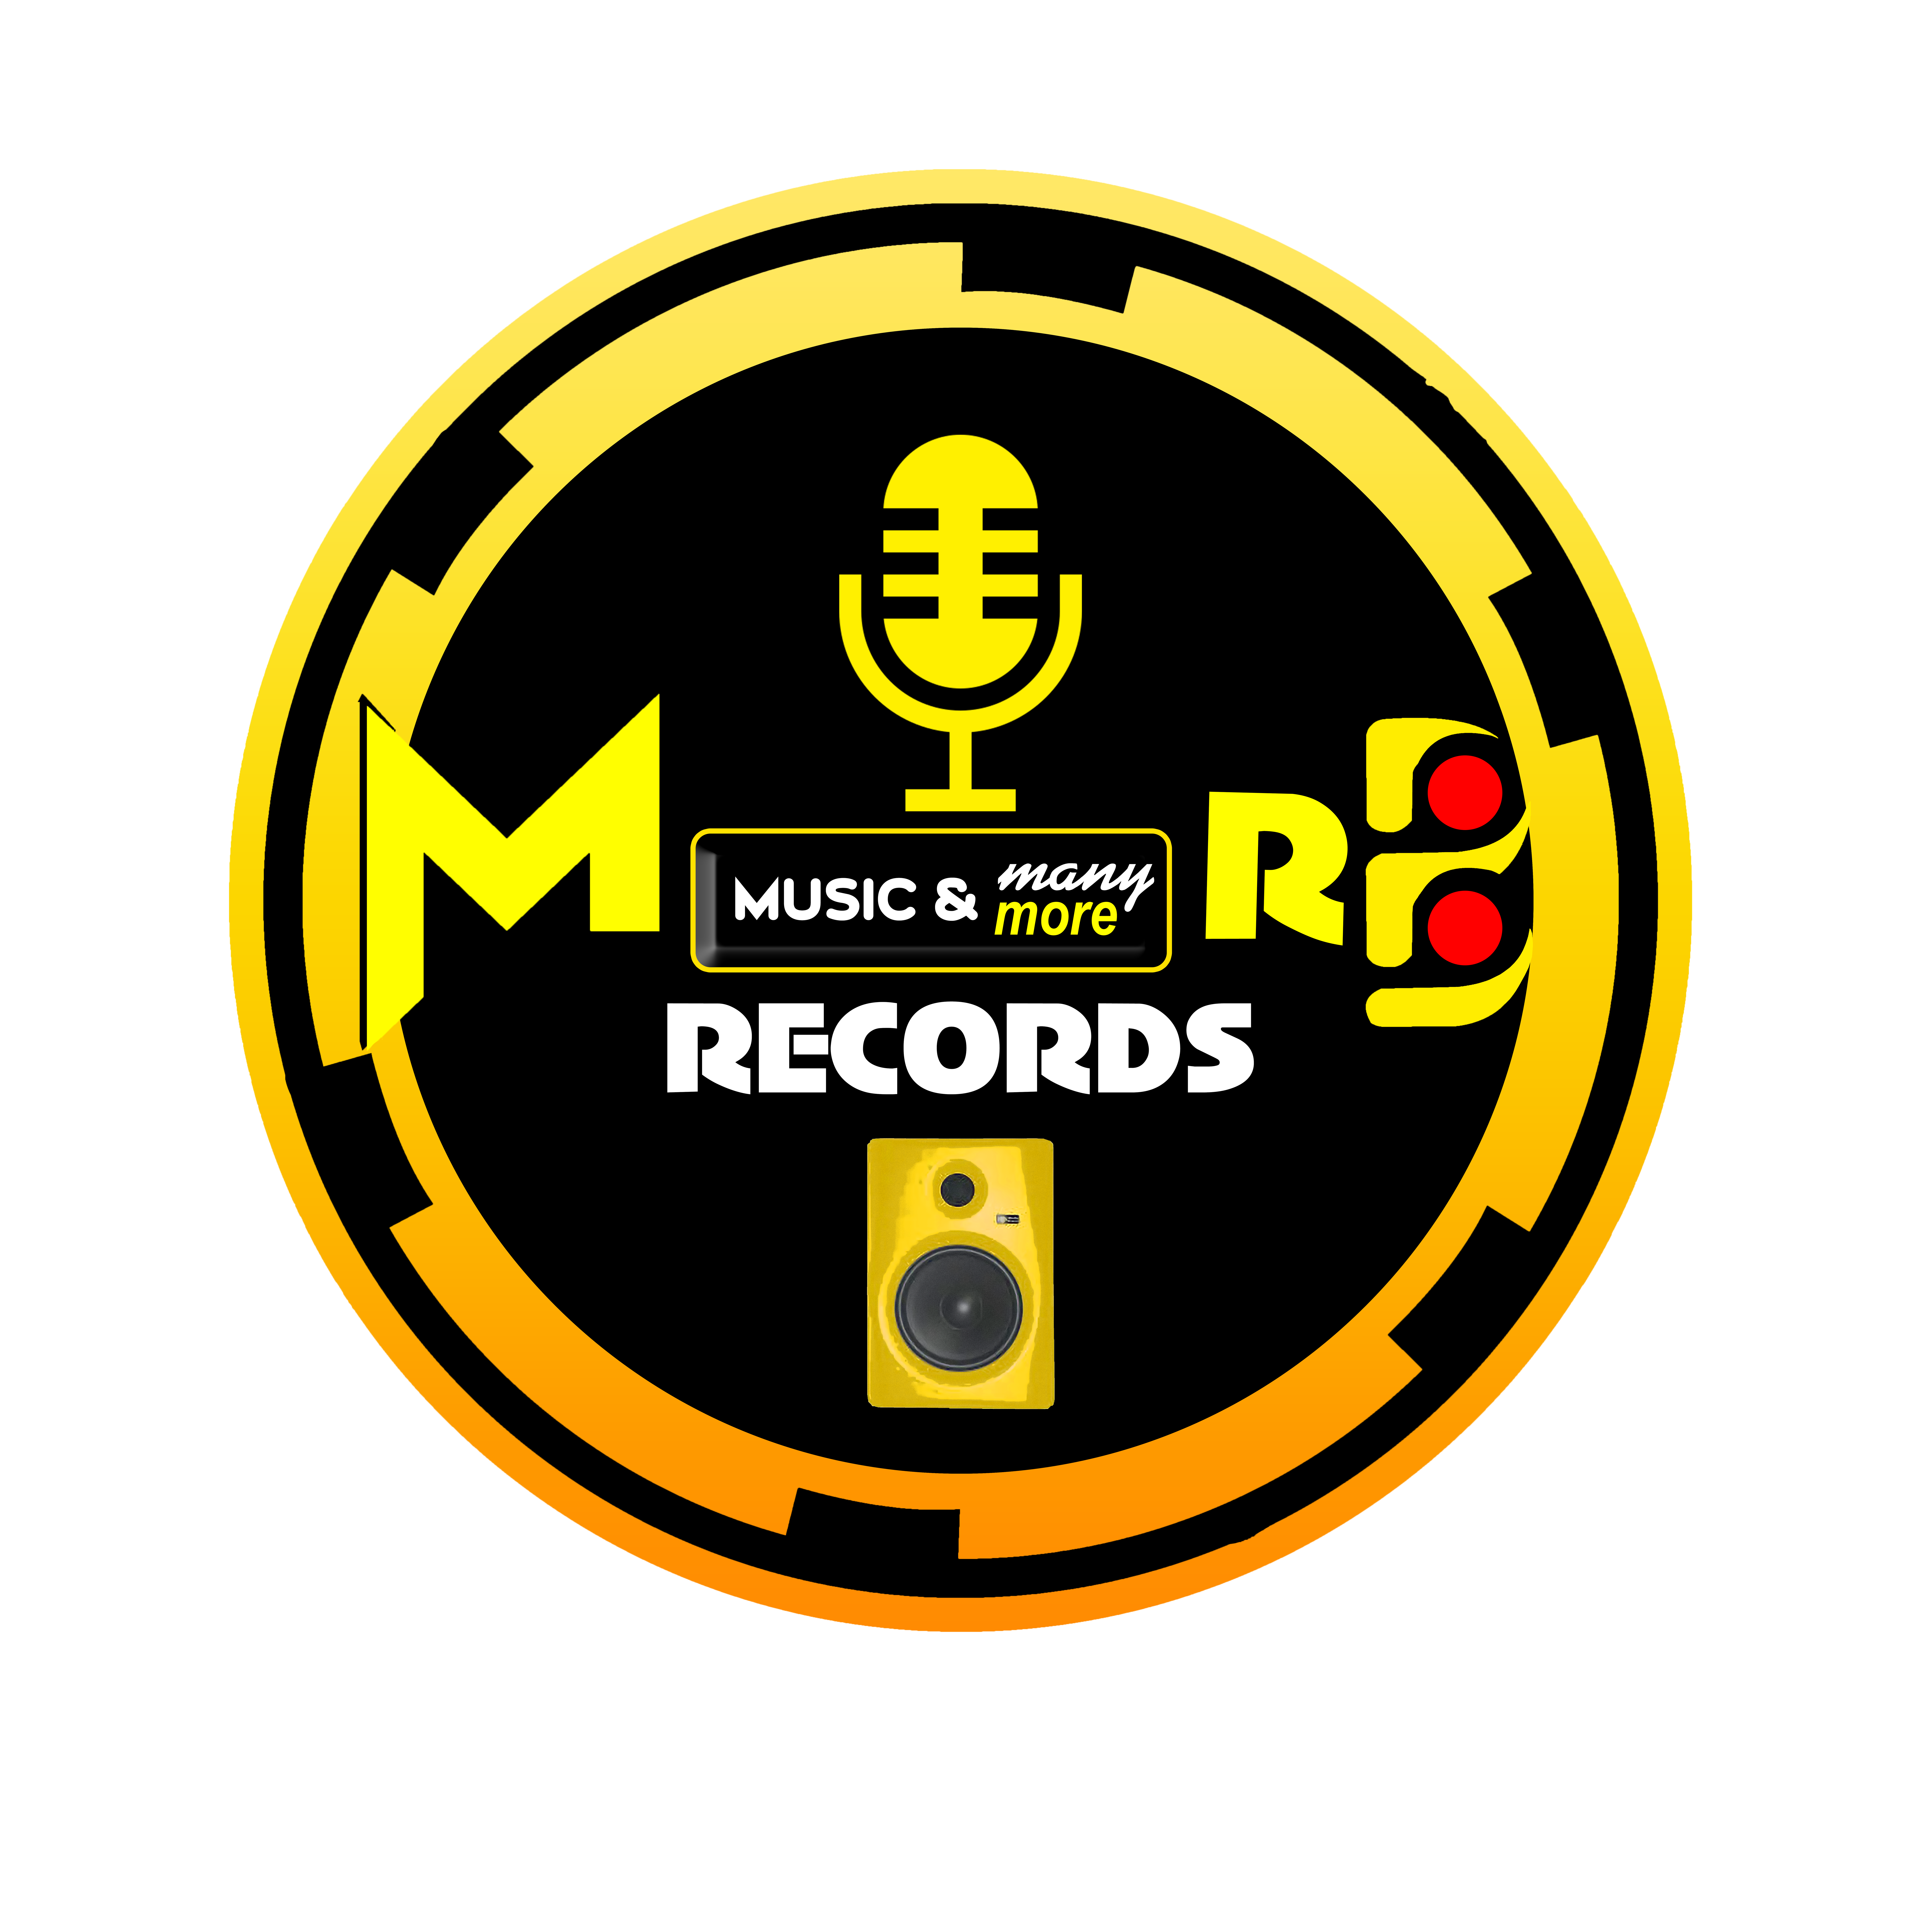 Mister B Records